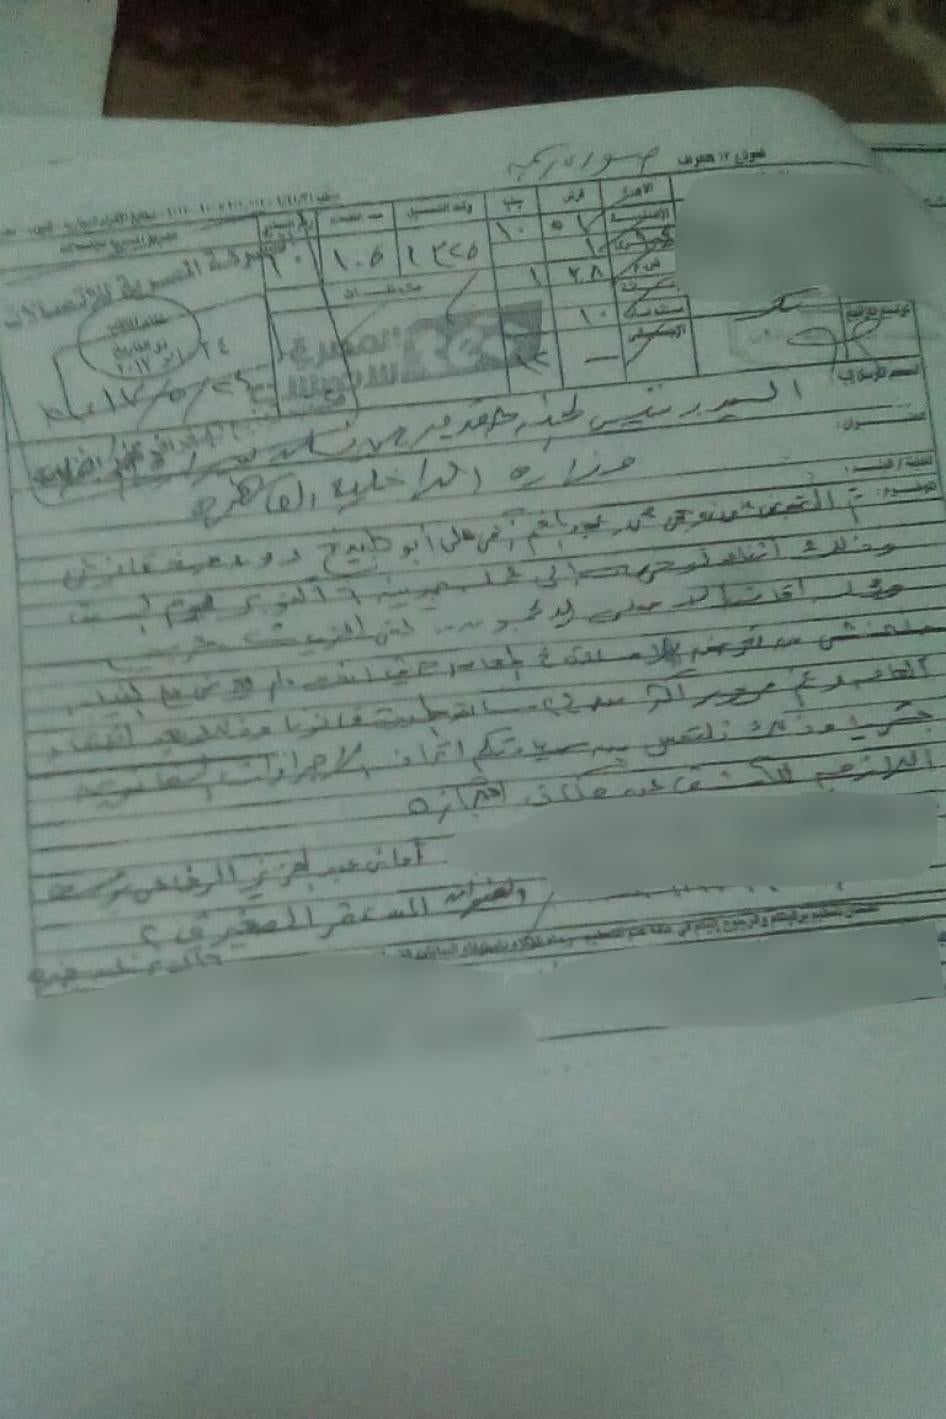 Copy of a telegram written in Arabic